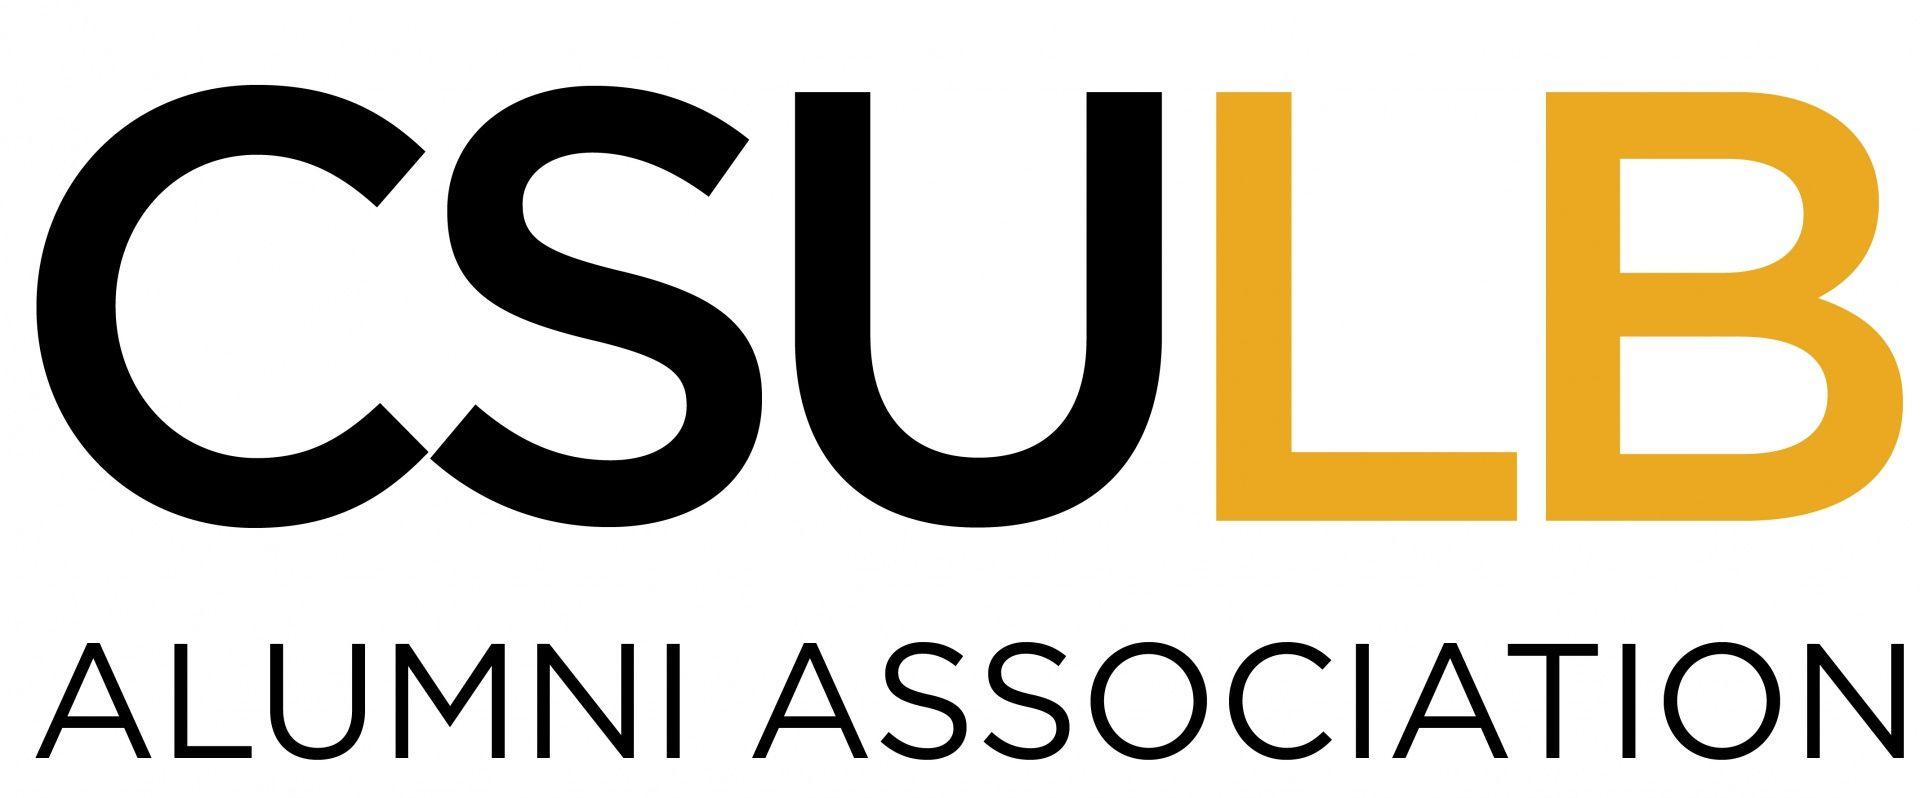 CSULB Logo - Homecoming. California State University, Long Beach